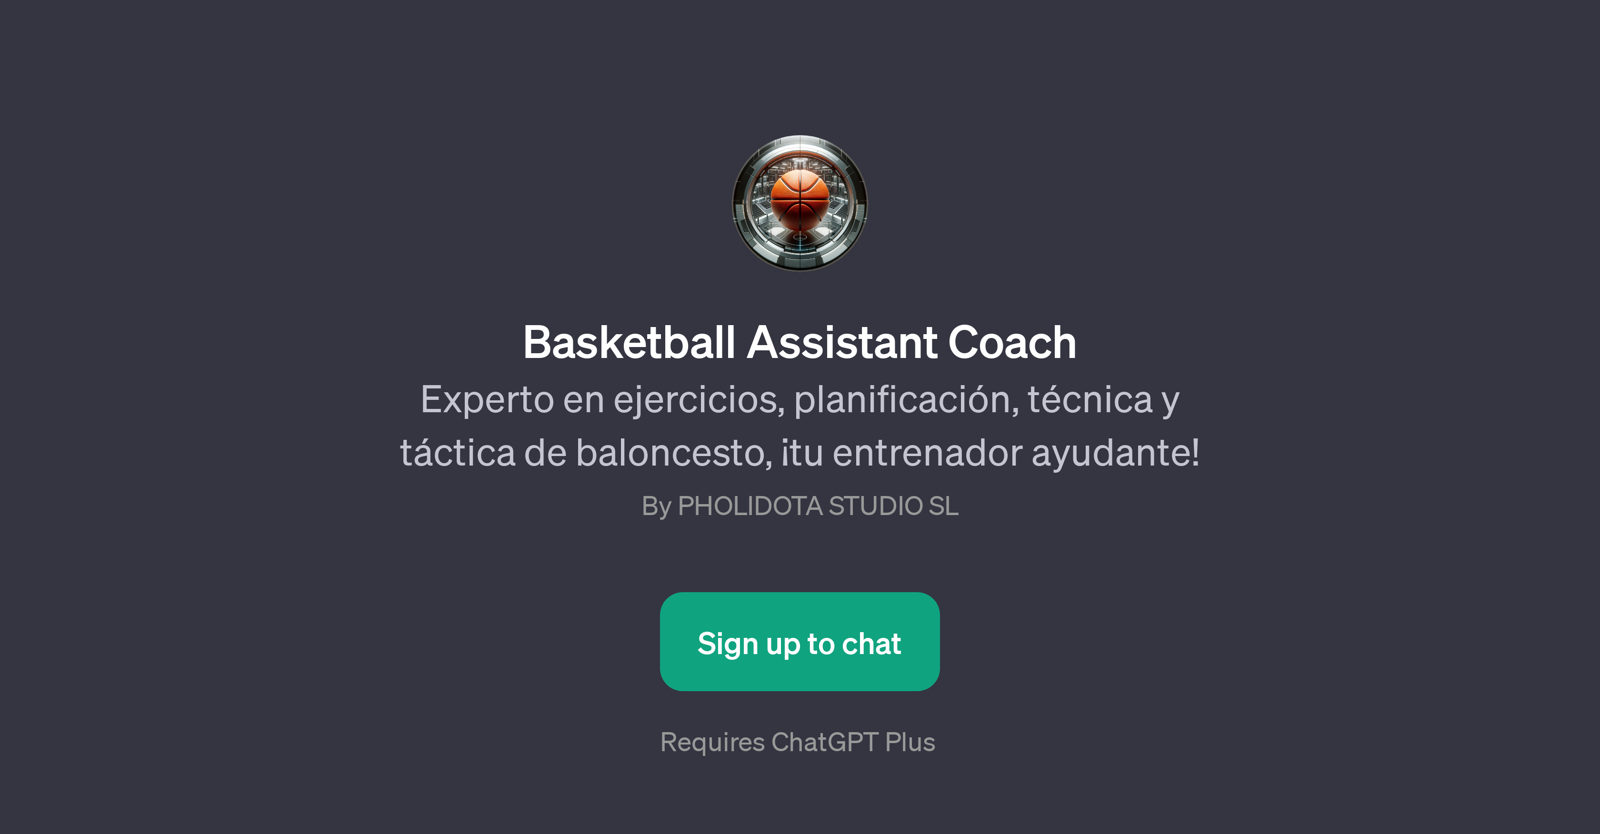 Basketball Assistant Coach website